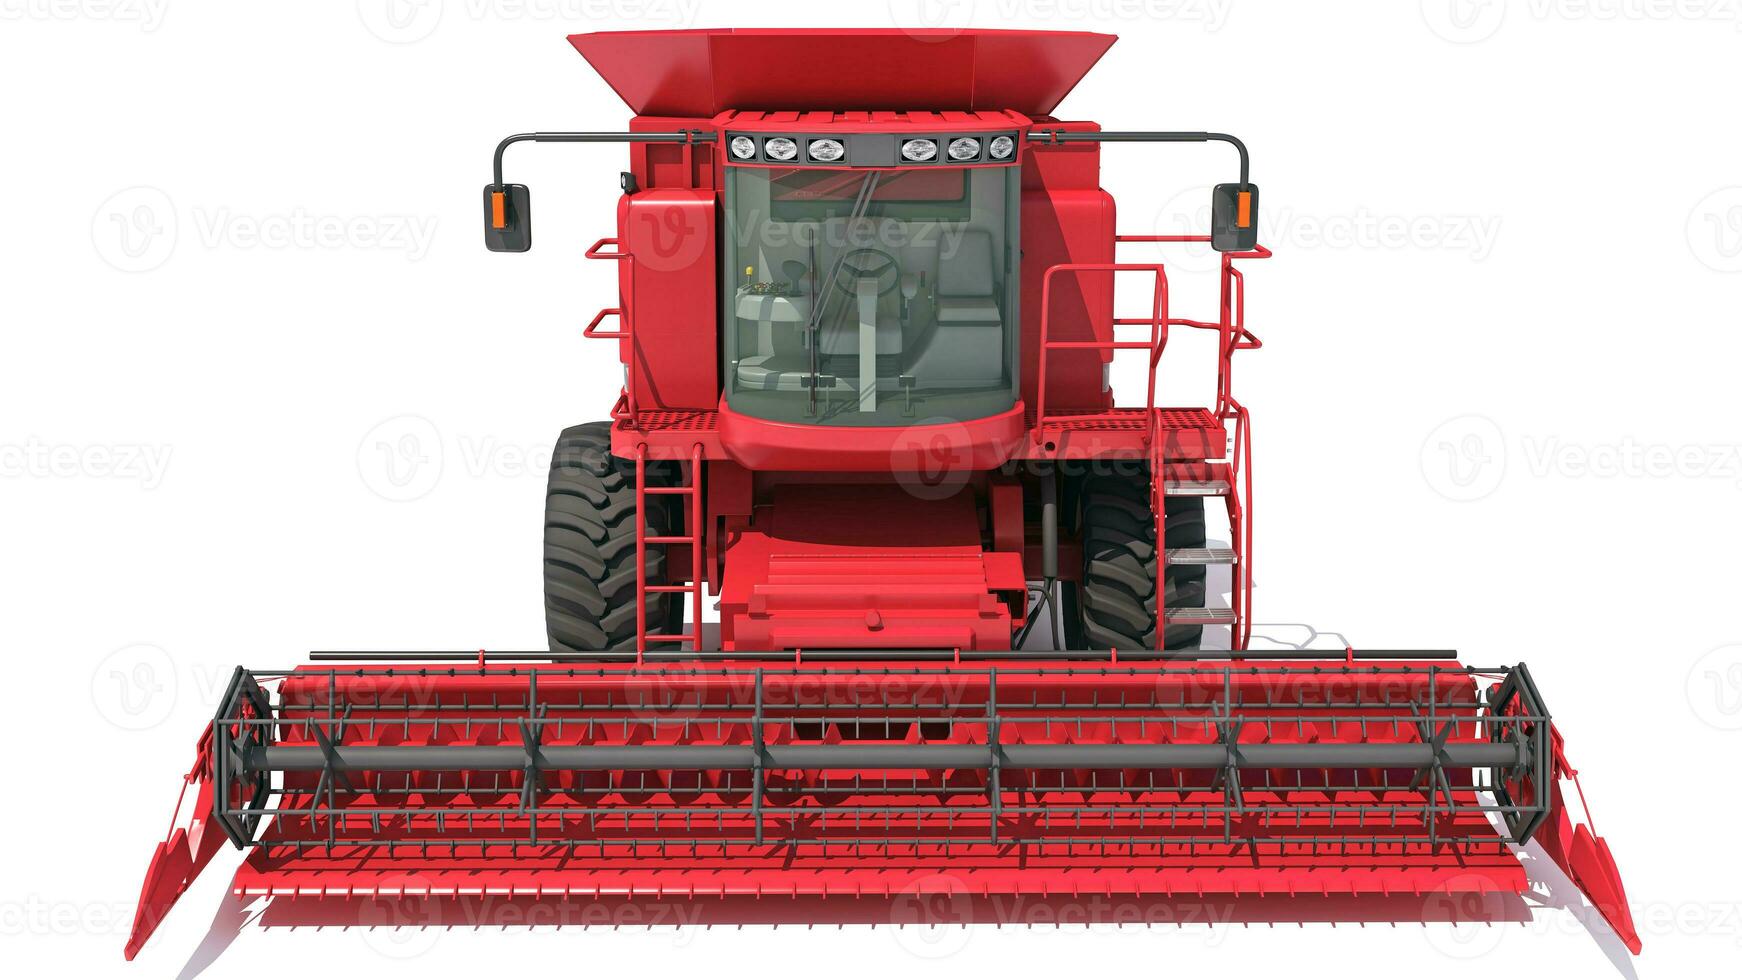 Combine Harvester farm equipment 3D rendering on white background photo